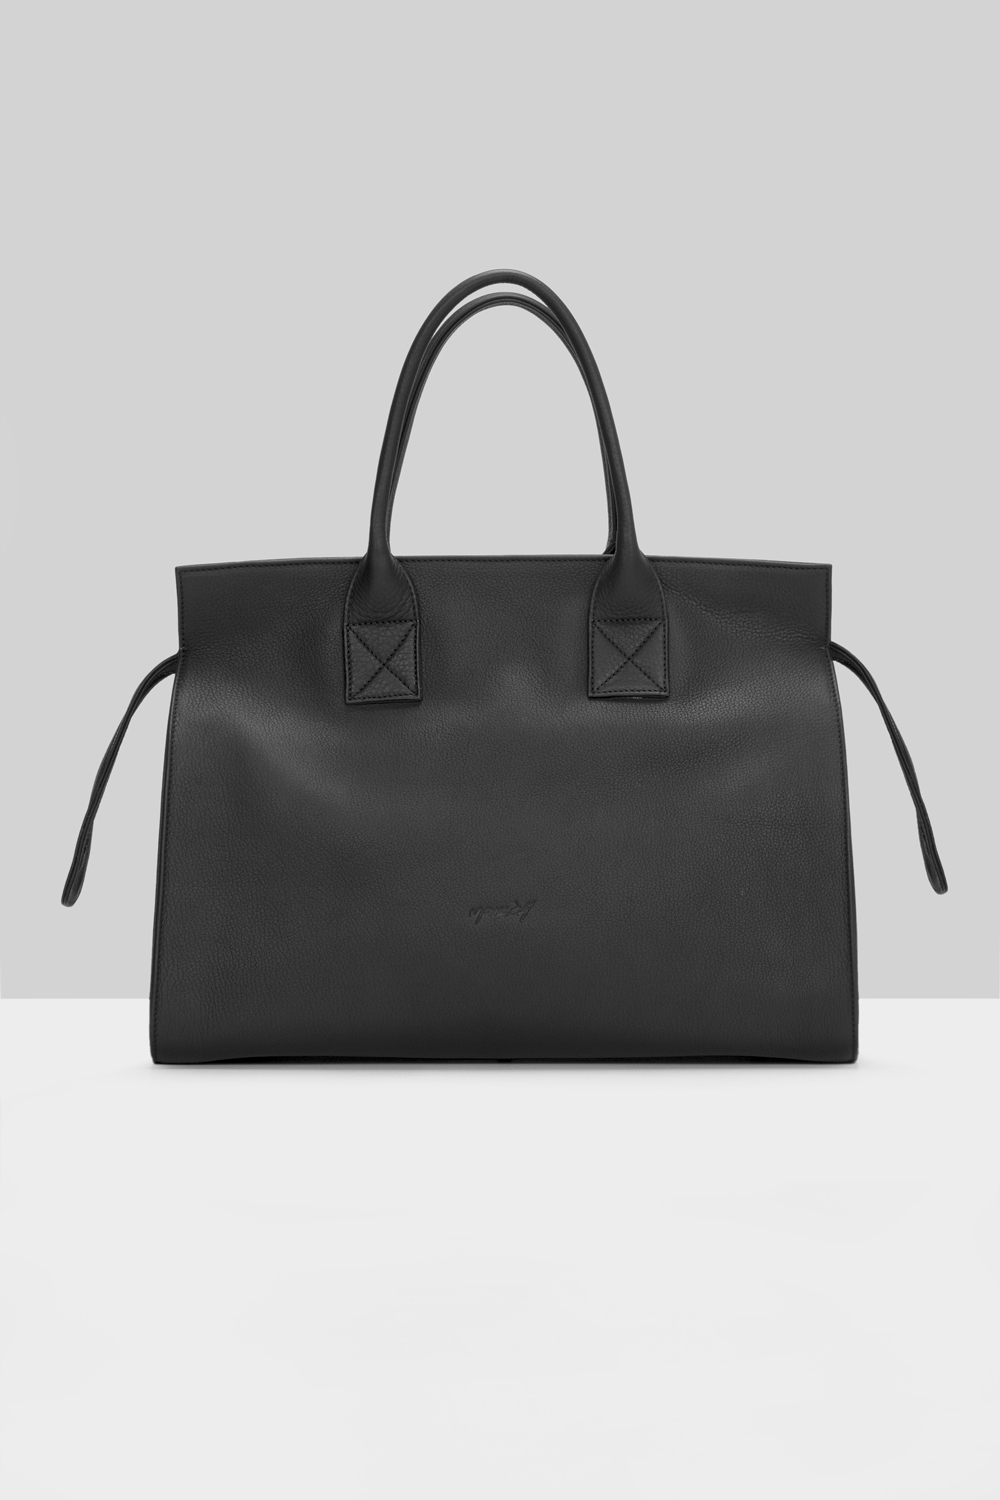 Curva Media Handbag in Classic Black